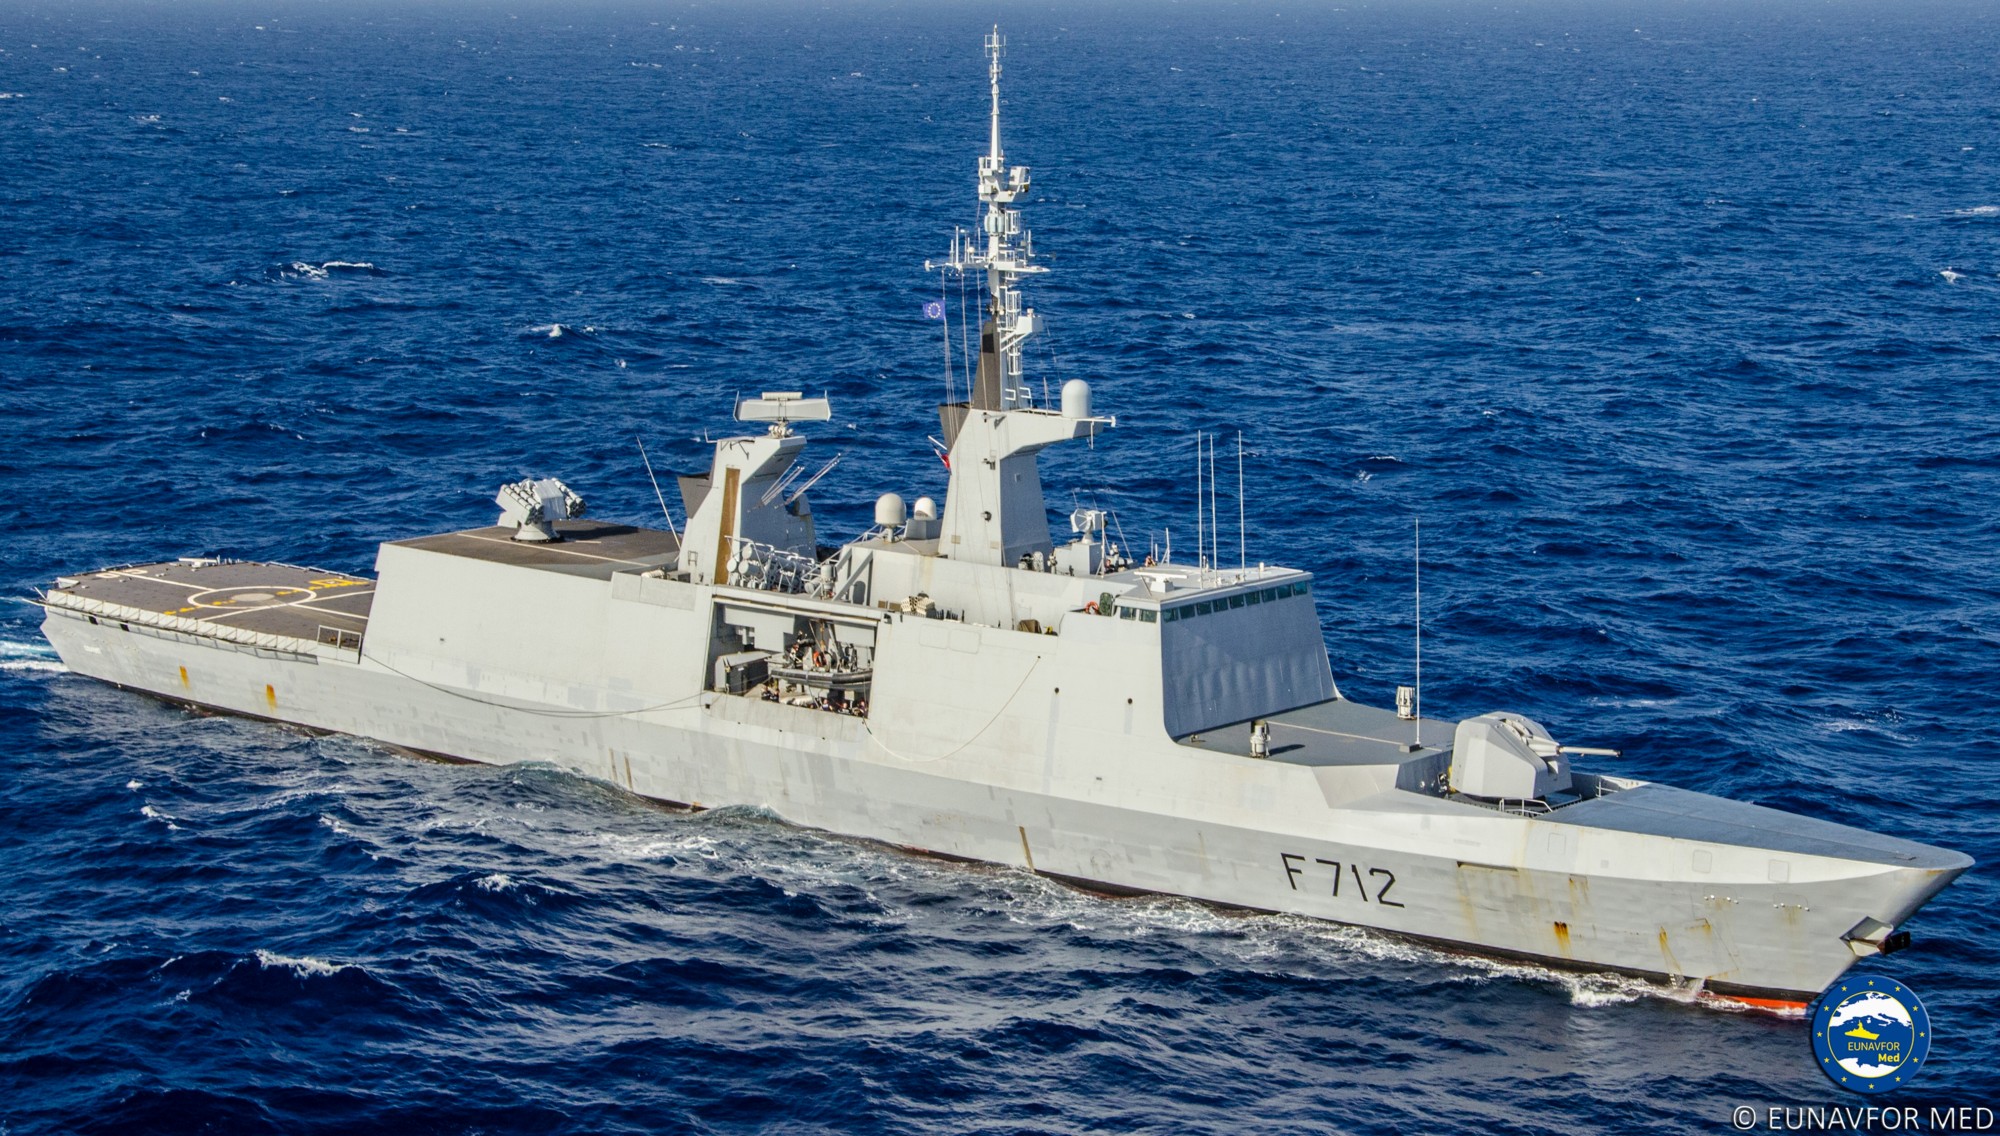 f-712 fs courbet la fayette class frigate french navy marine nationale 07x